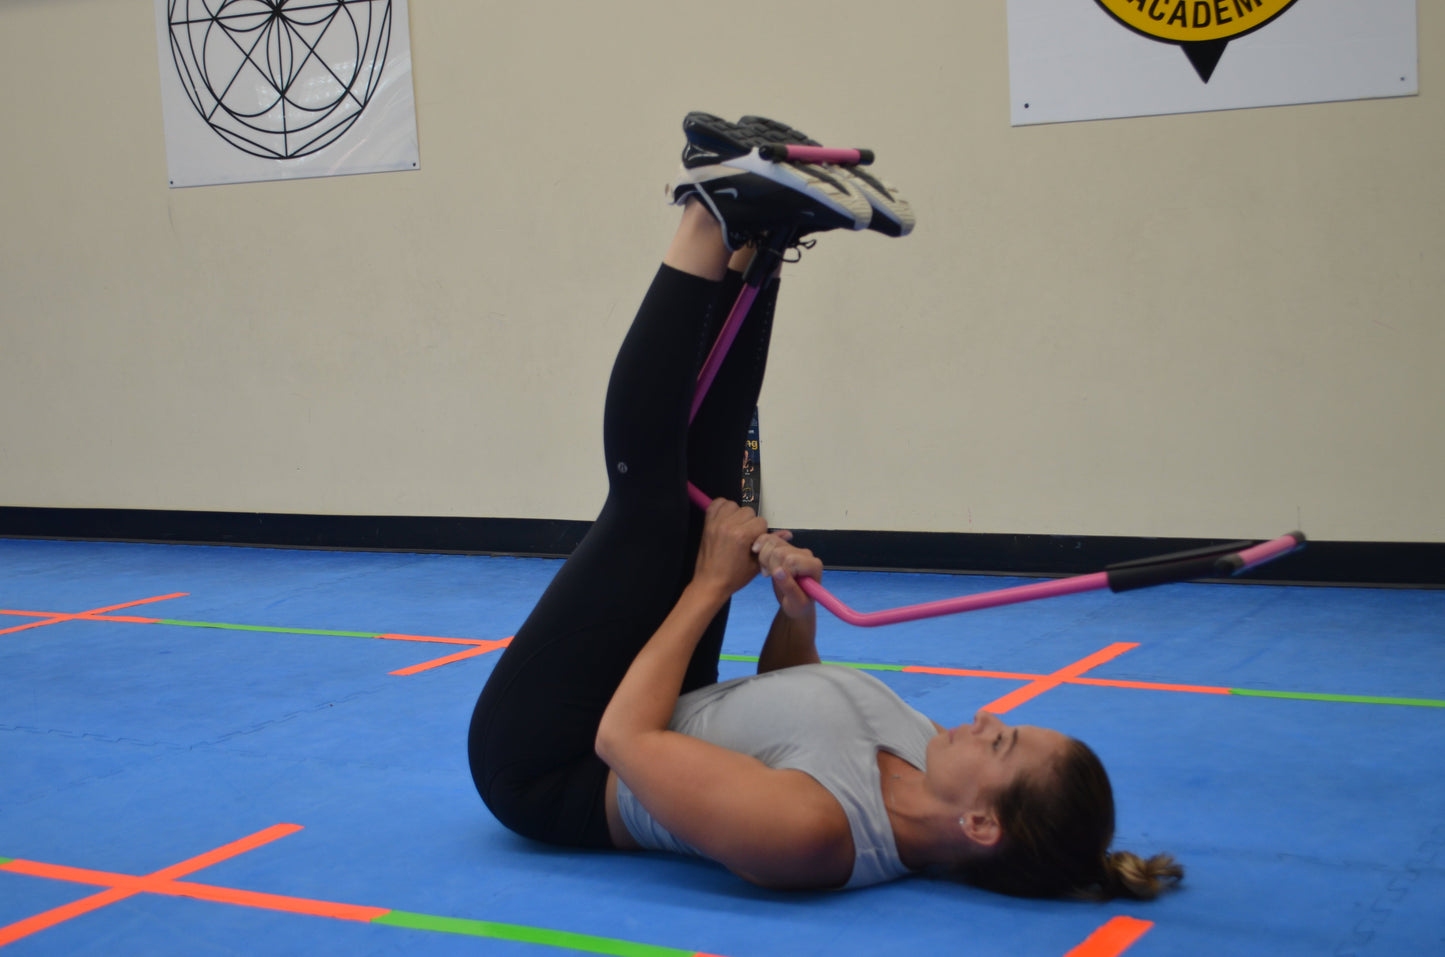 Wellness Center Bundle - Pink Shape Stretch - (2) Body Stretch Bars and 24 x 36" Stretch Guide